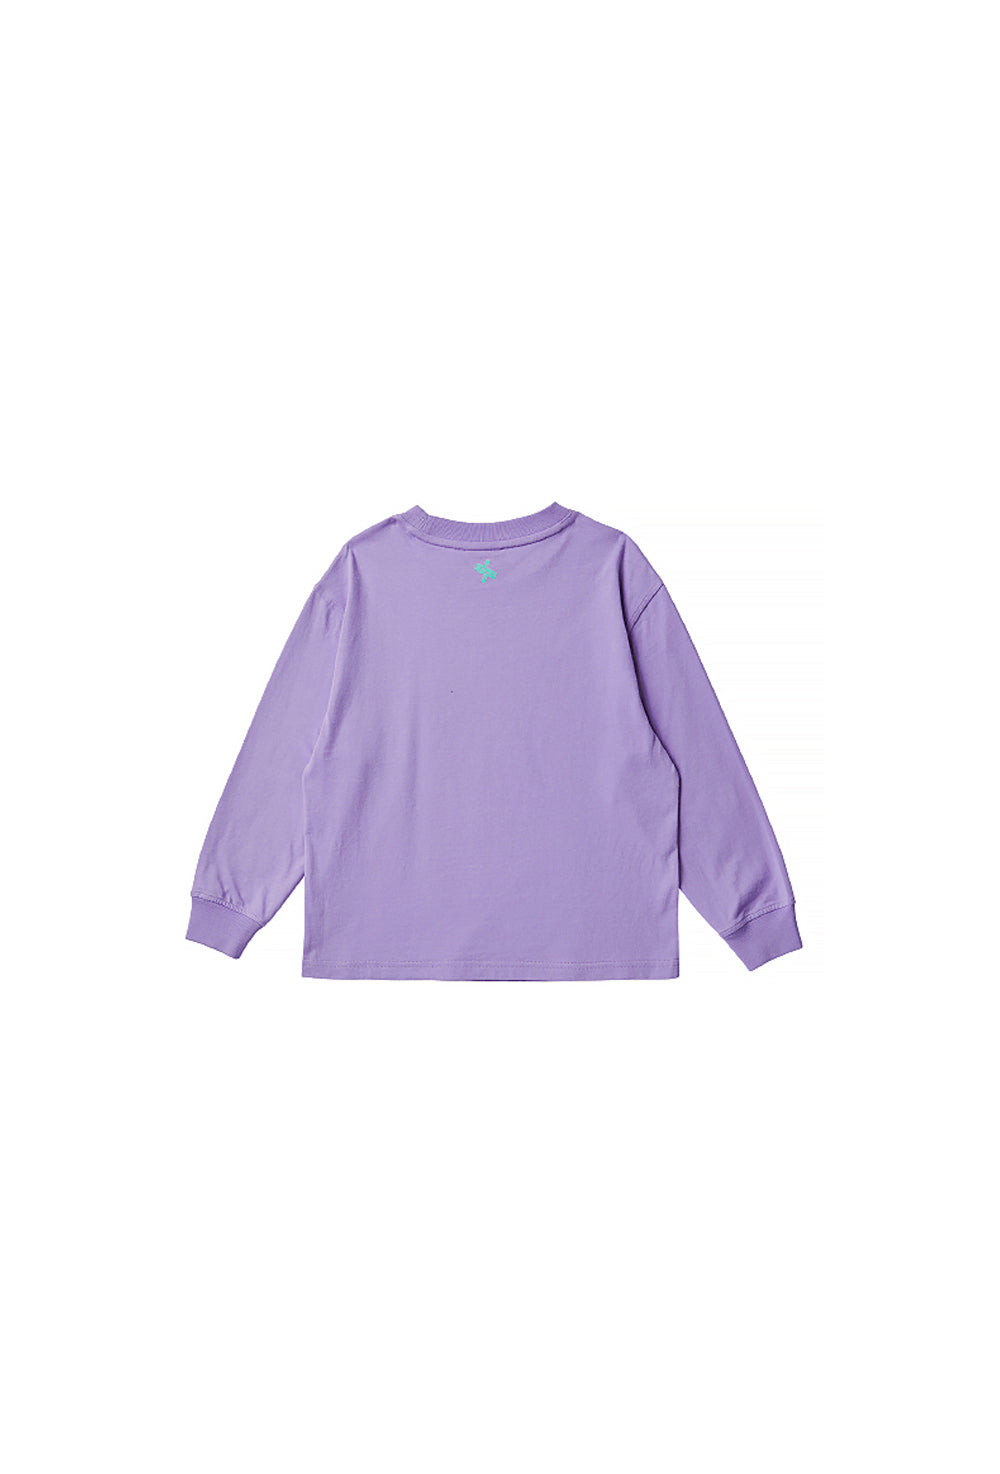 XEXYMIX Kids Play Basic T-shirts - Gentle Lavender